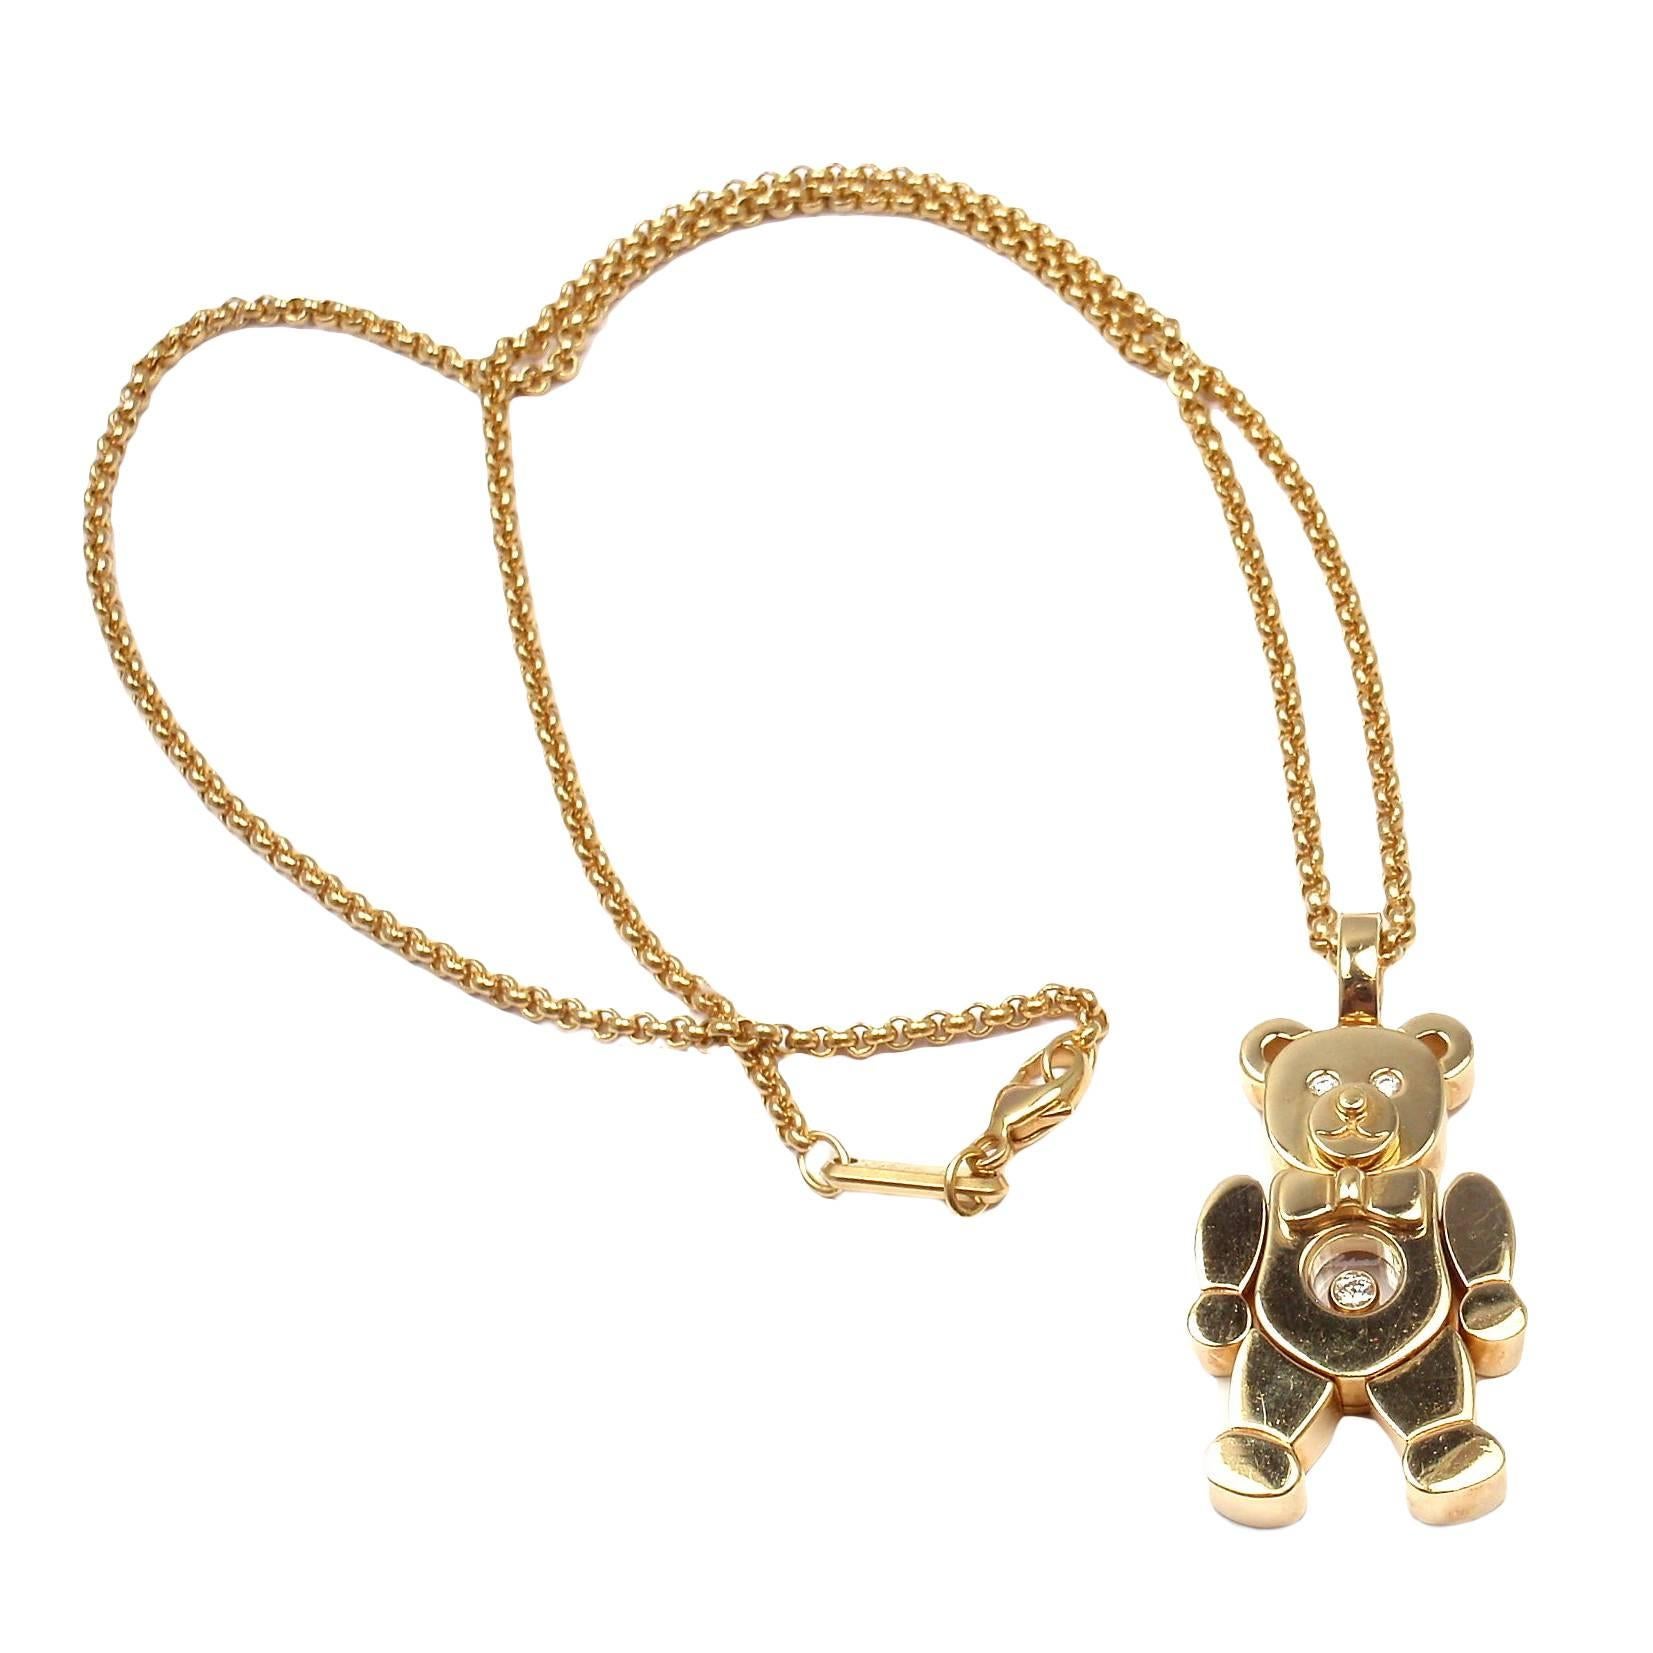 Chopard Happy Diamond Teddy Bear Gold Pendant Necklace